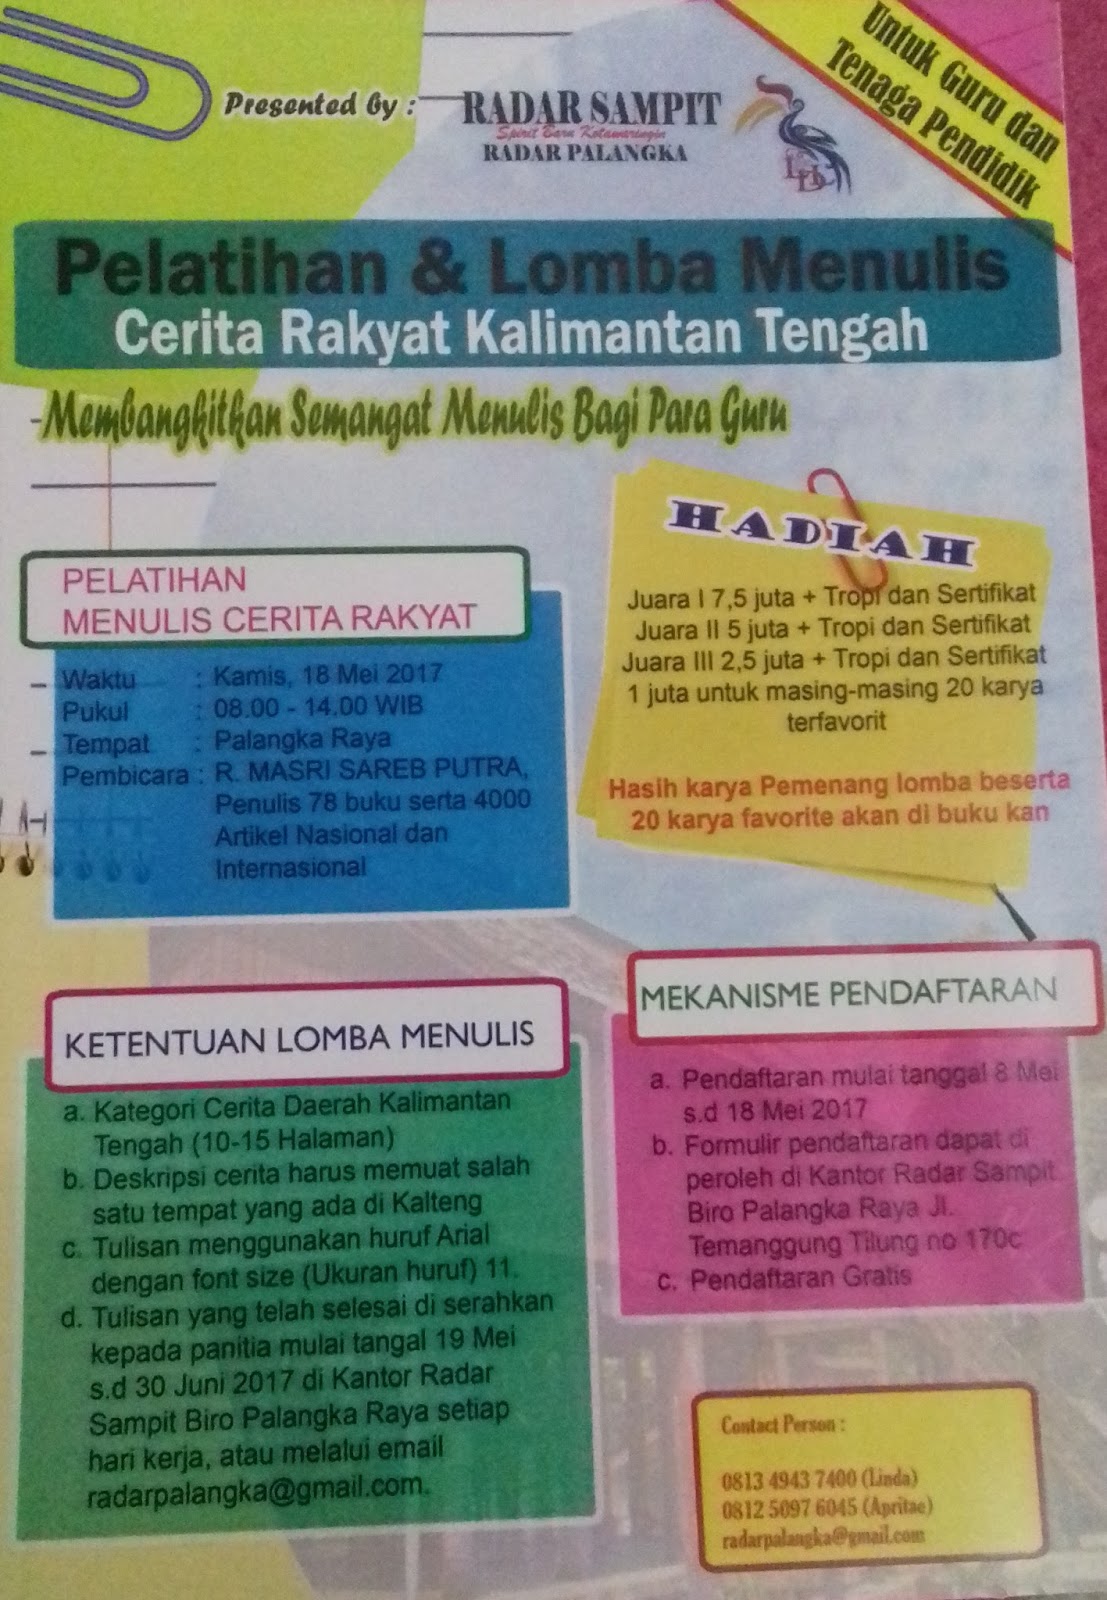 Pelatihan & Lomba Menulis (Cerita Rakyat Kalimantan Tengah)